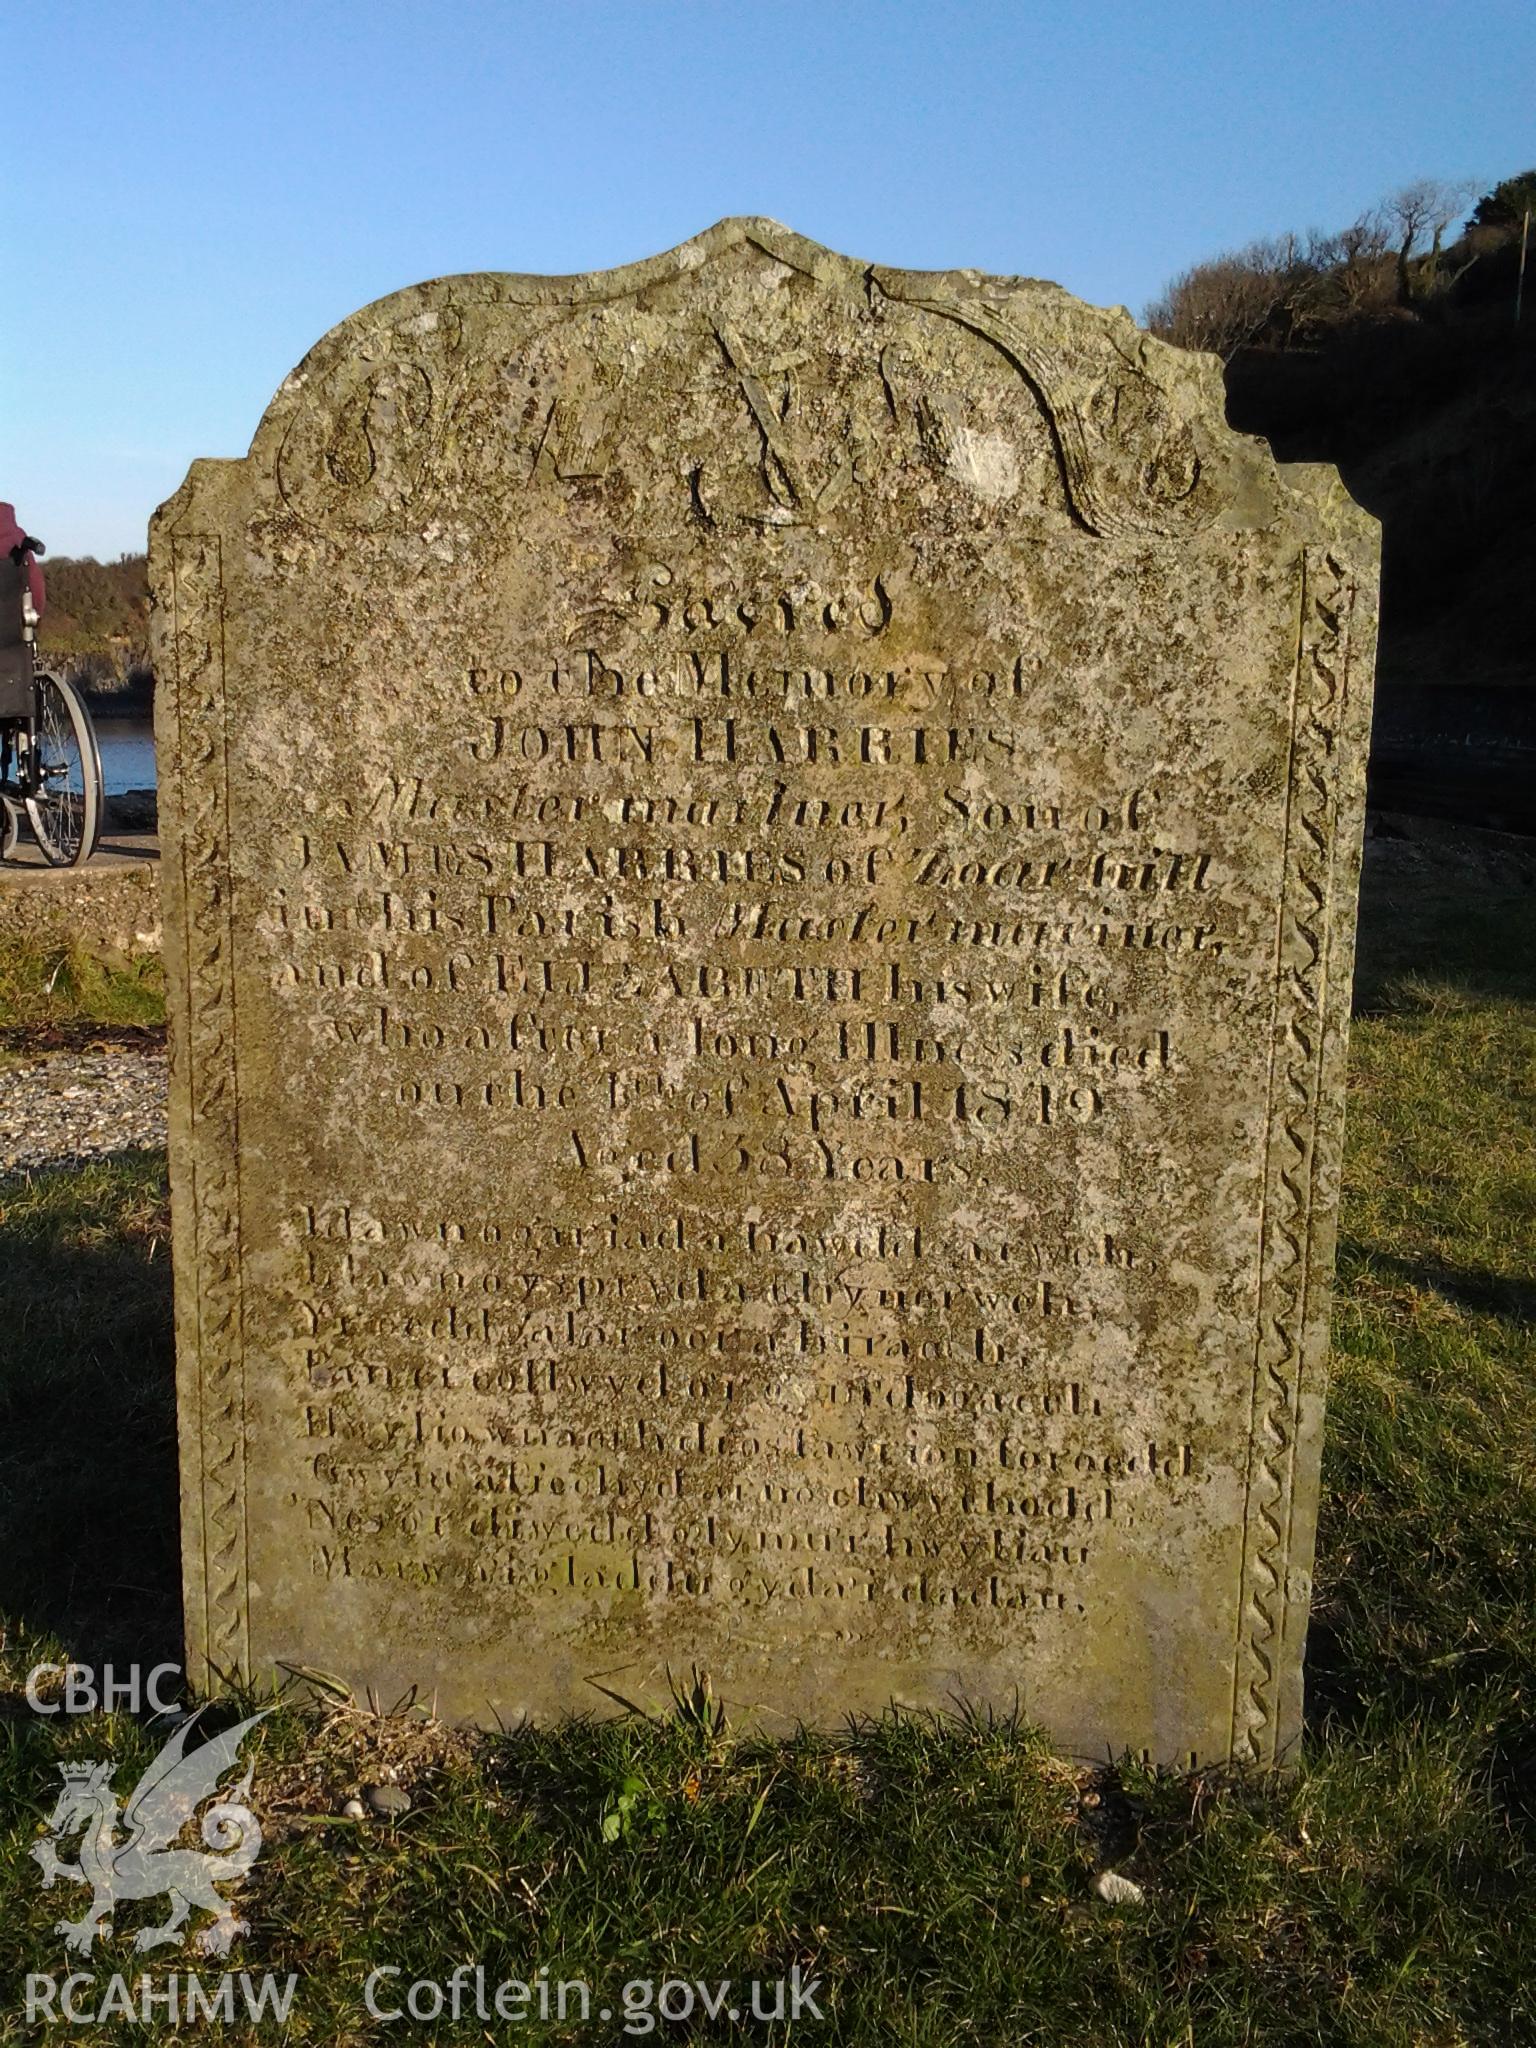 Gravestone commemorating John Harries, master mariner, who died in April 1819